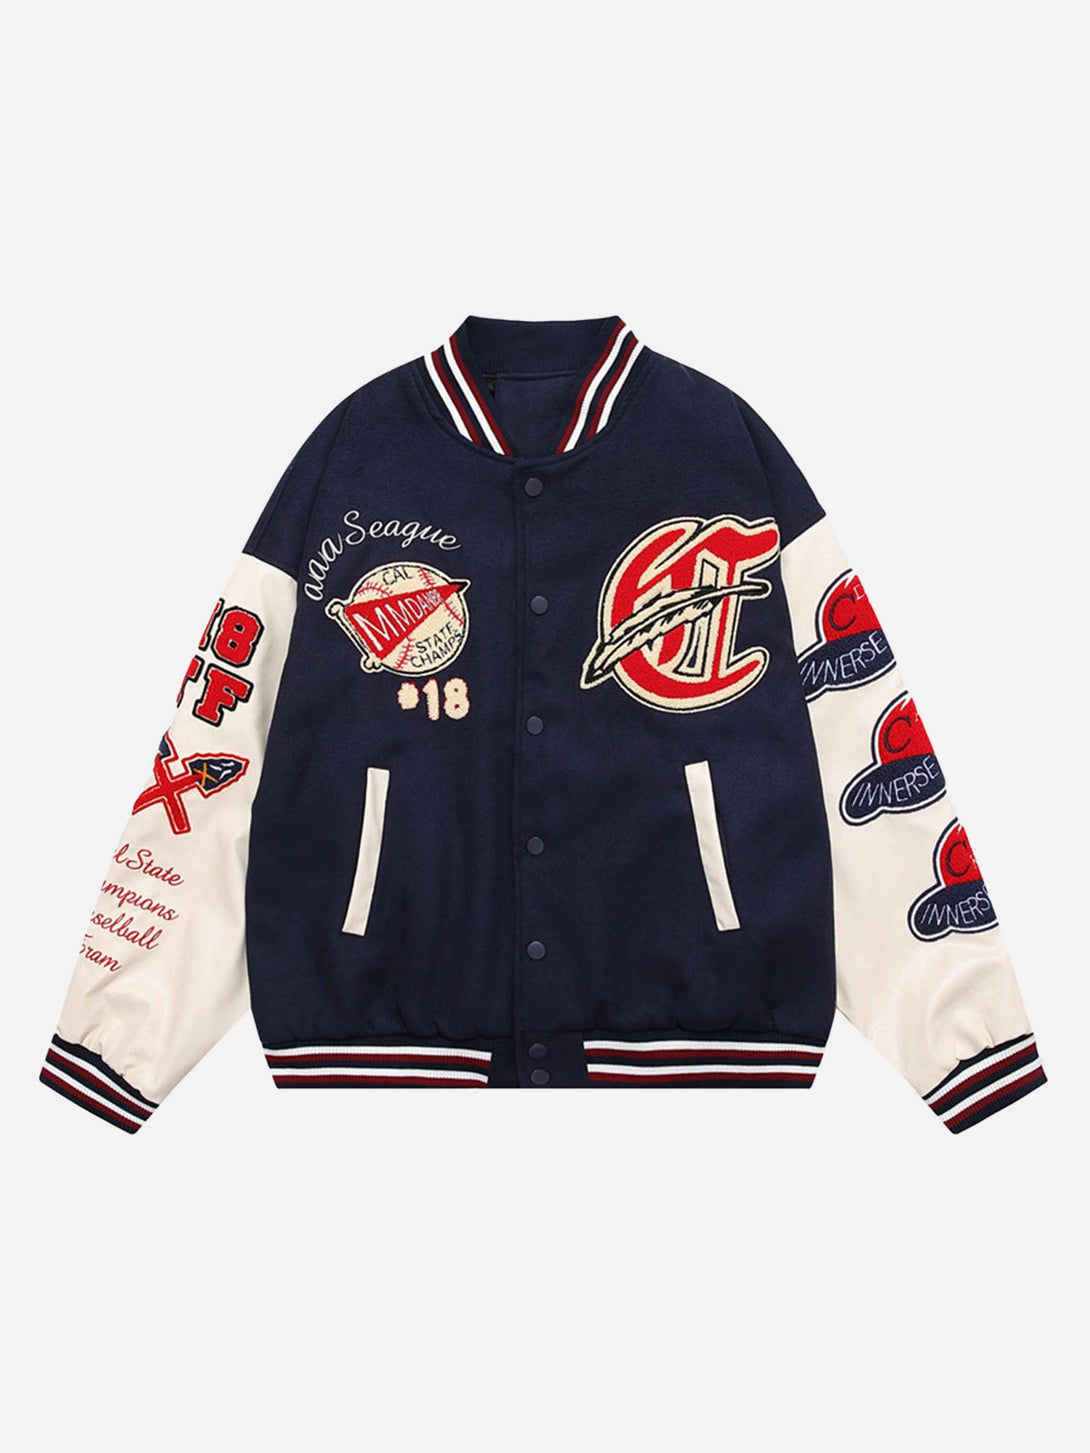 Majesda® - American Patchwork PU Leather Sleeve Embroidered Alphabet Baseball Jacket-1819- Outfit Ideas - Streetwear Fashion - majesda.com